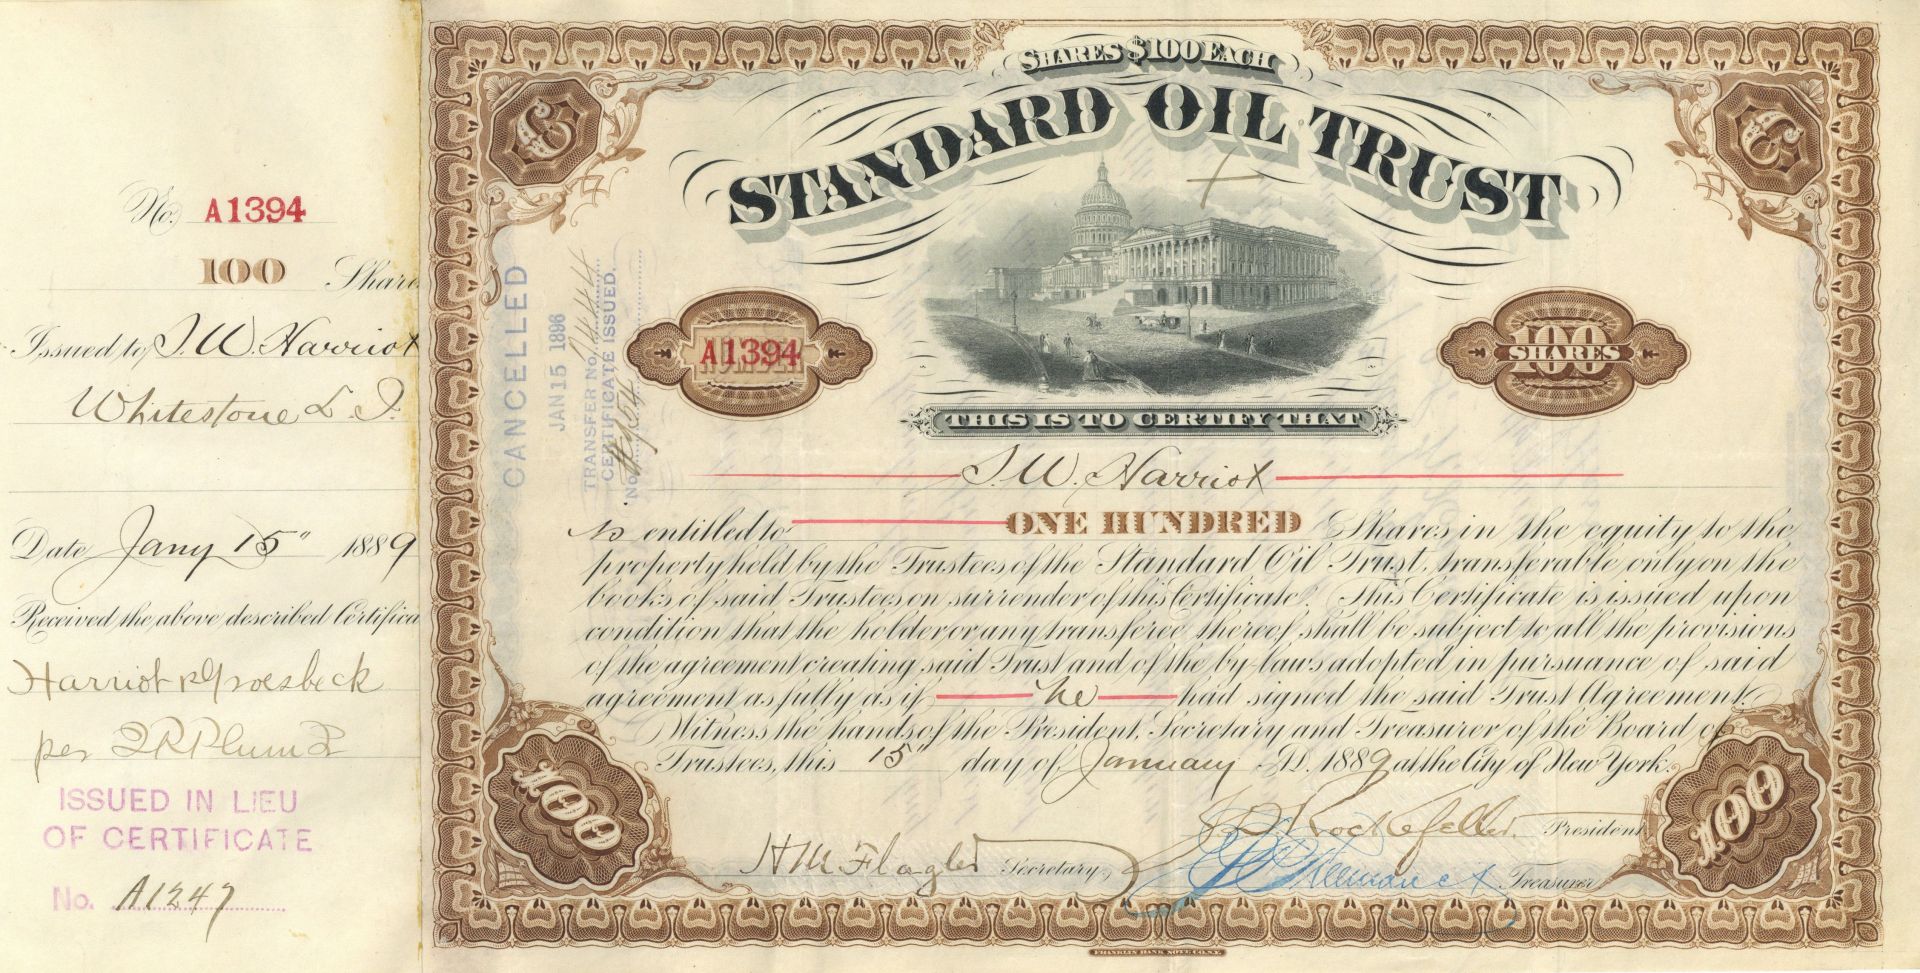 A History of John D. Rockefeller's Standard Oil - Fuel Express